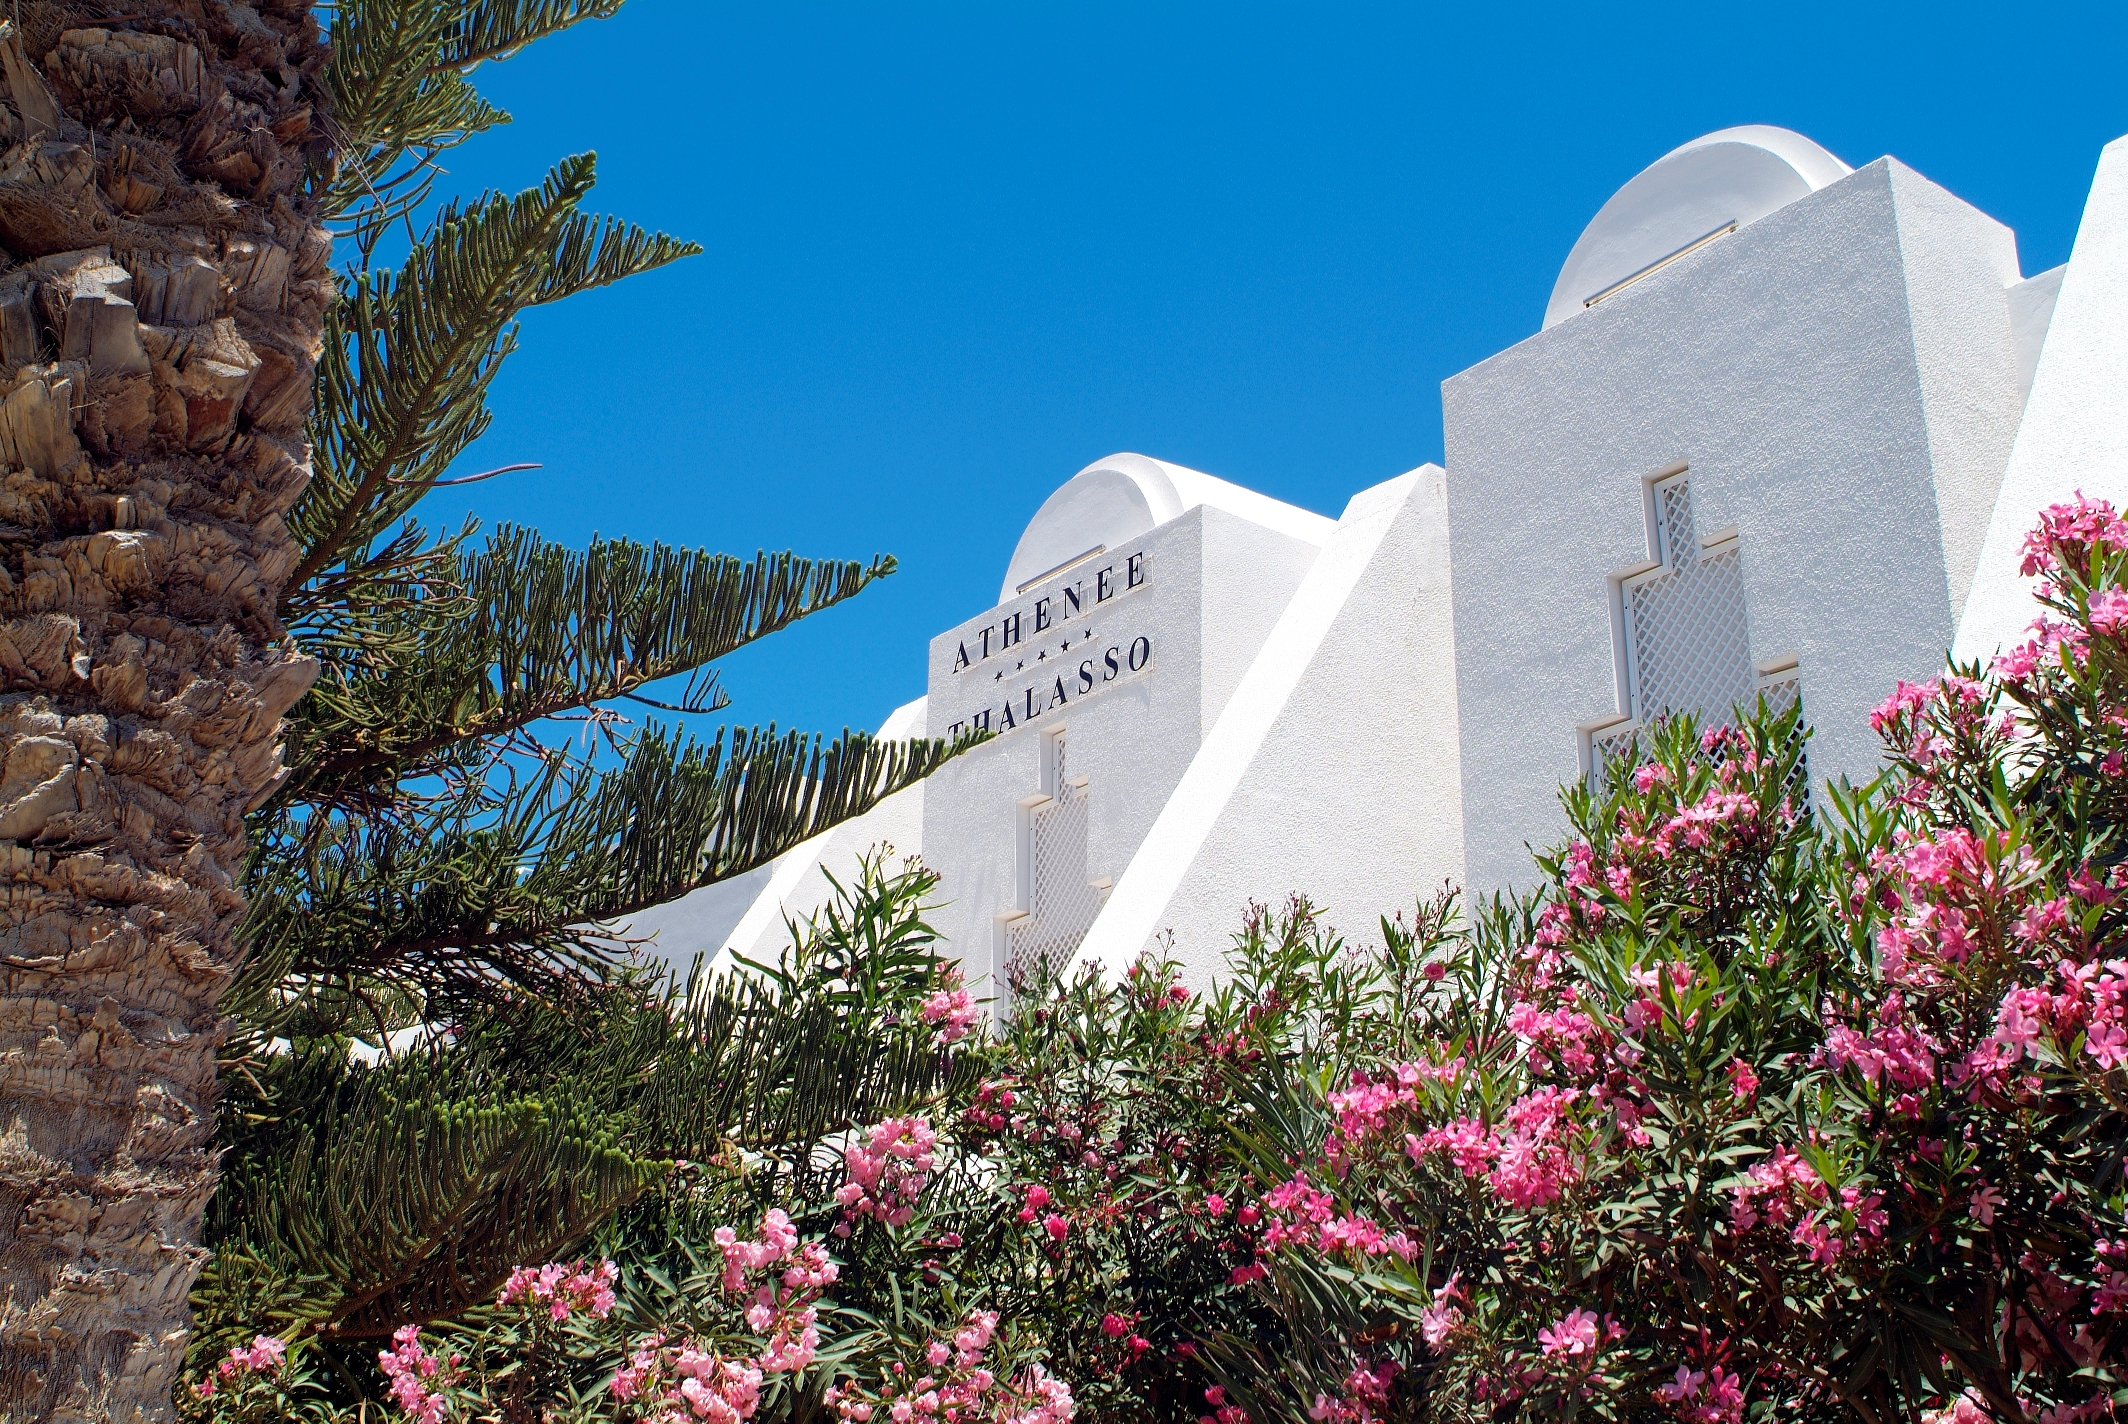 Athenee Thalasso - entrée du Radisson Blu Palace à Djerba